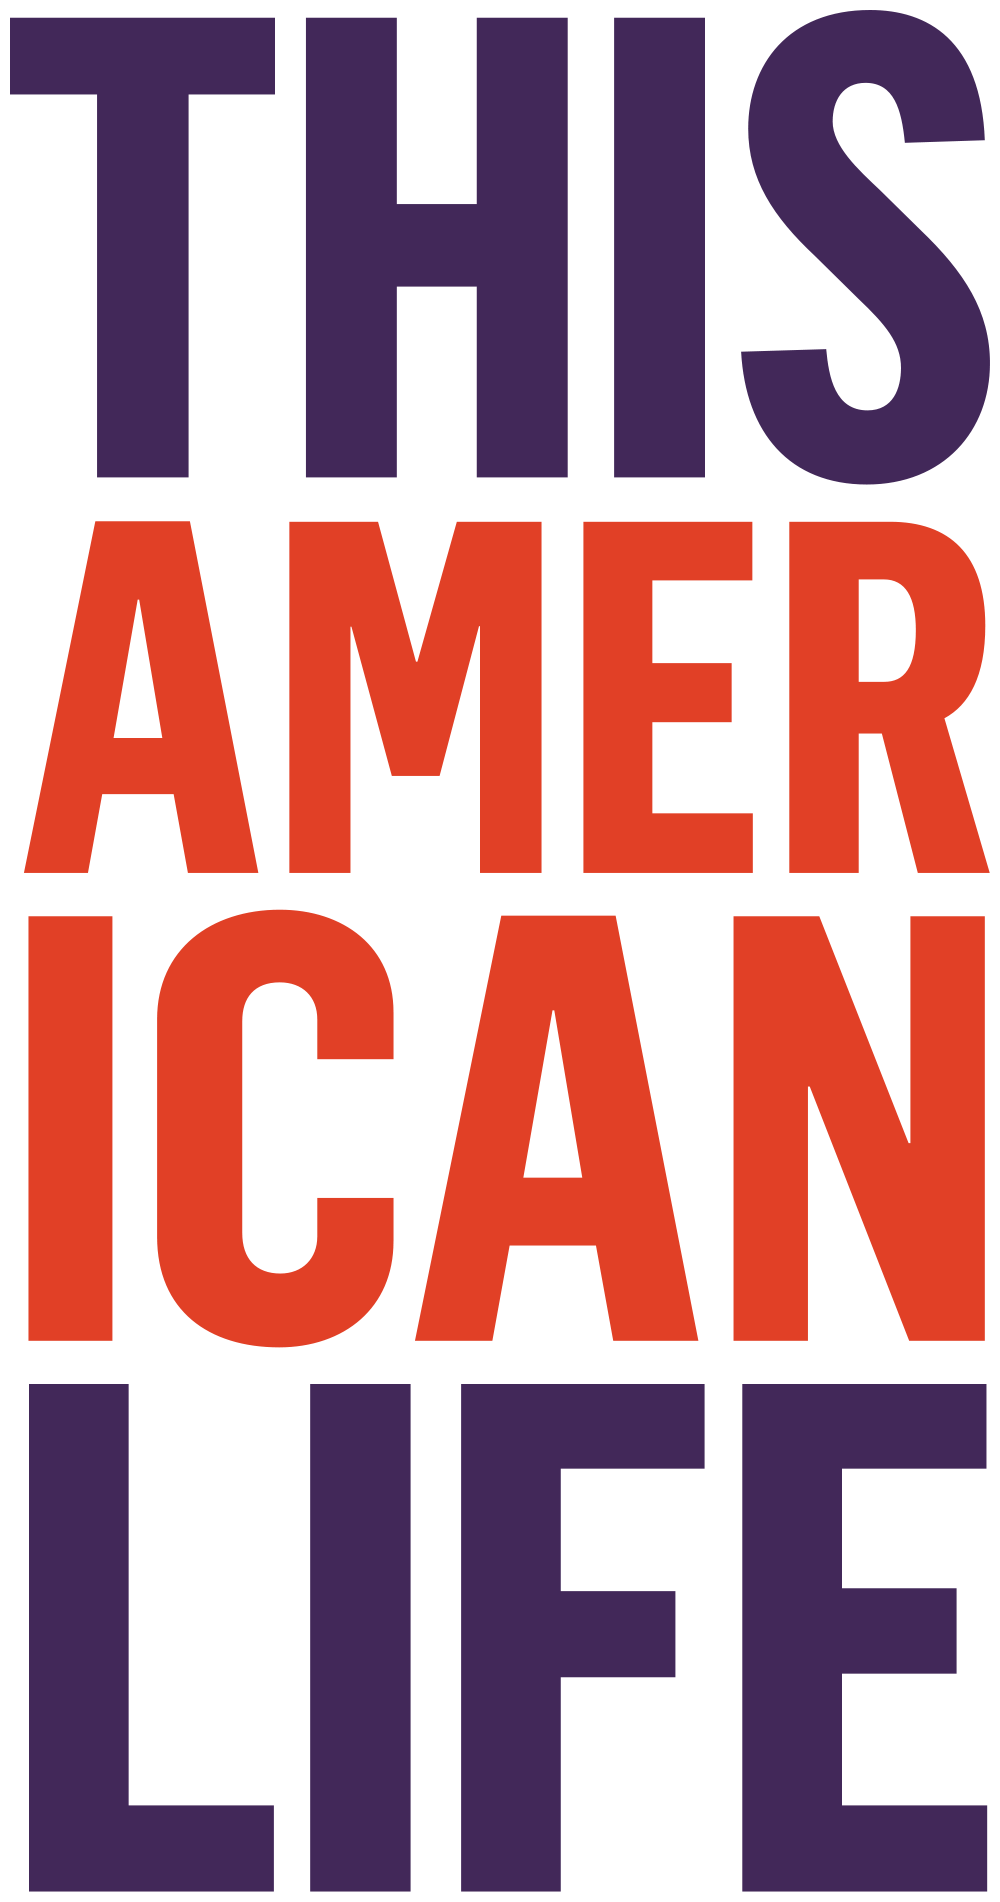 This Logo - This American Life logo.svg